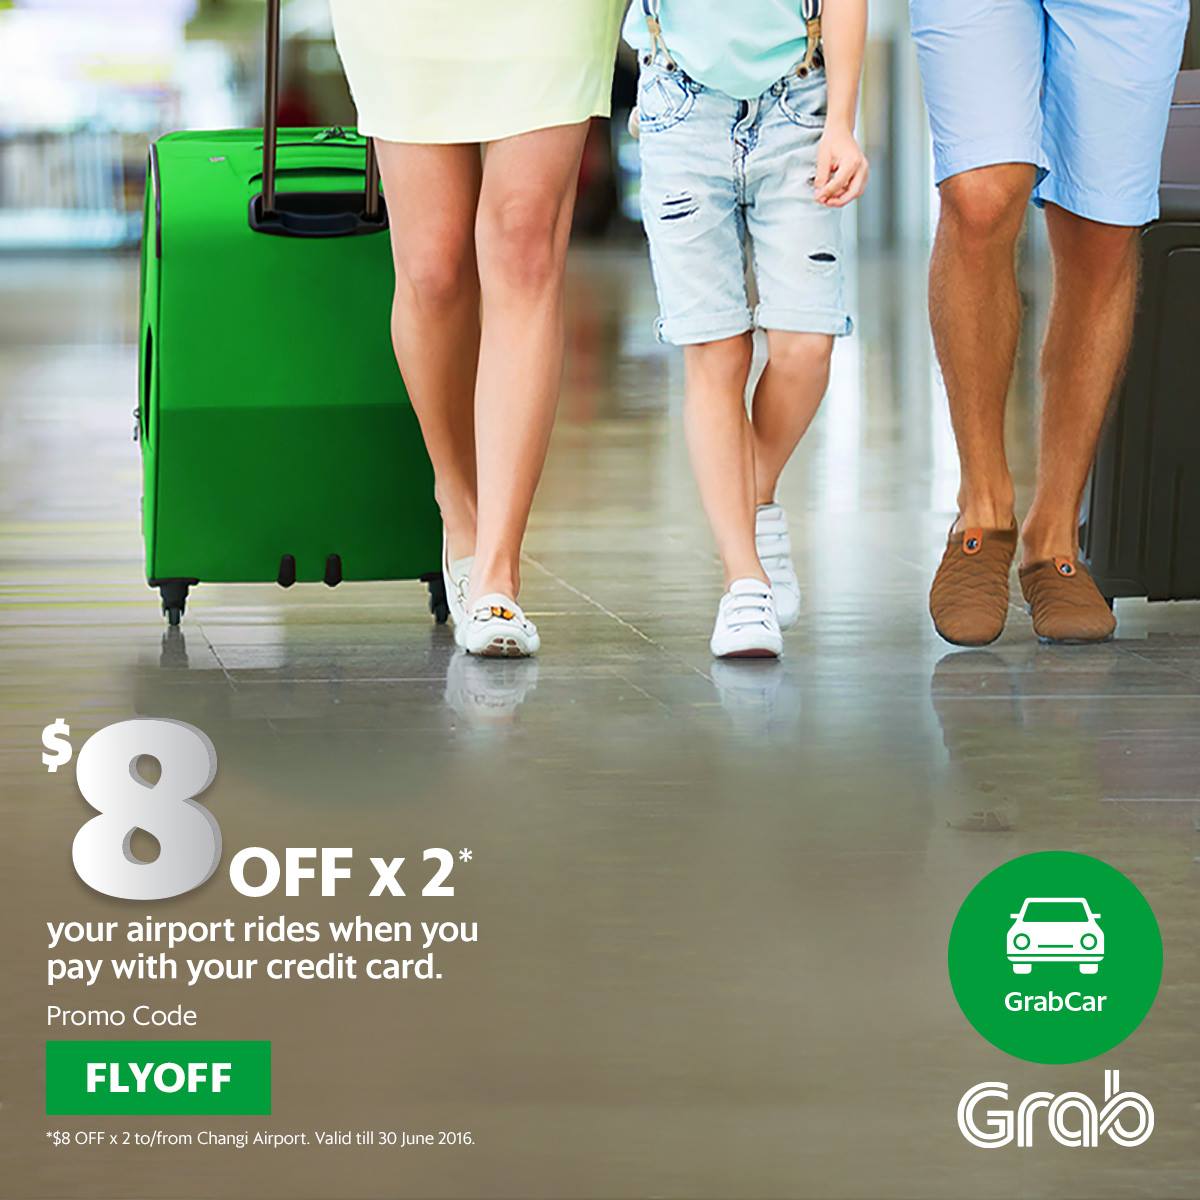 Grab SG Airport Promo Code $8 Off 2 GrabCar Rides ends 30 Jun 2016